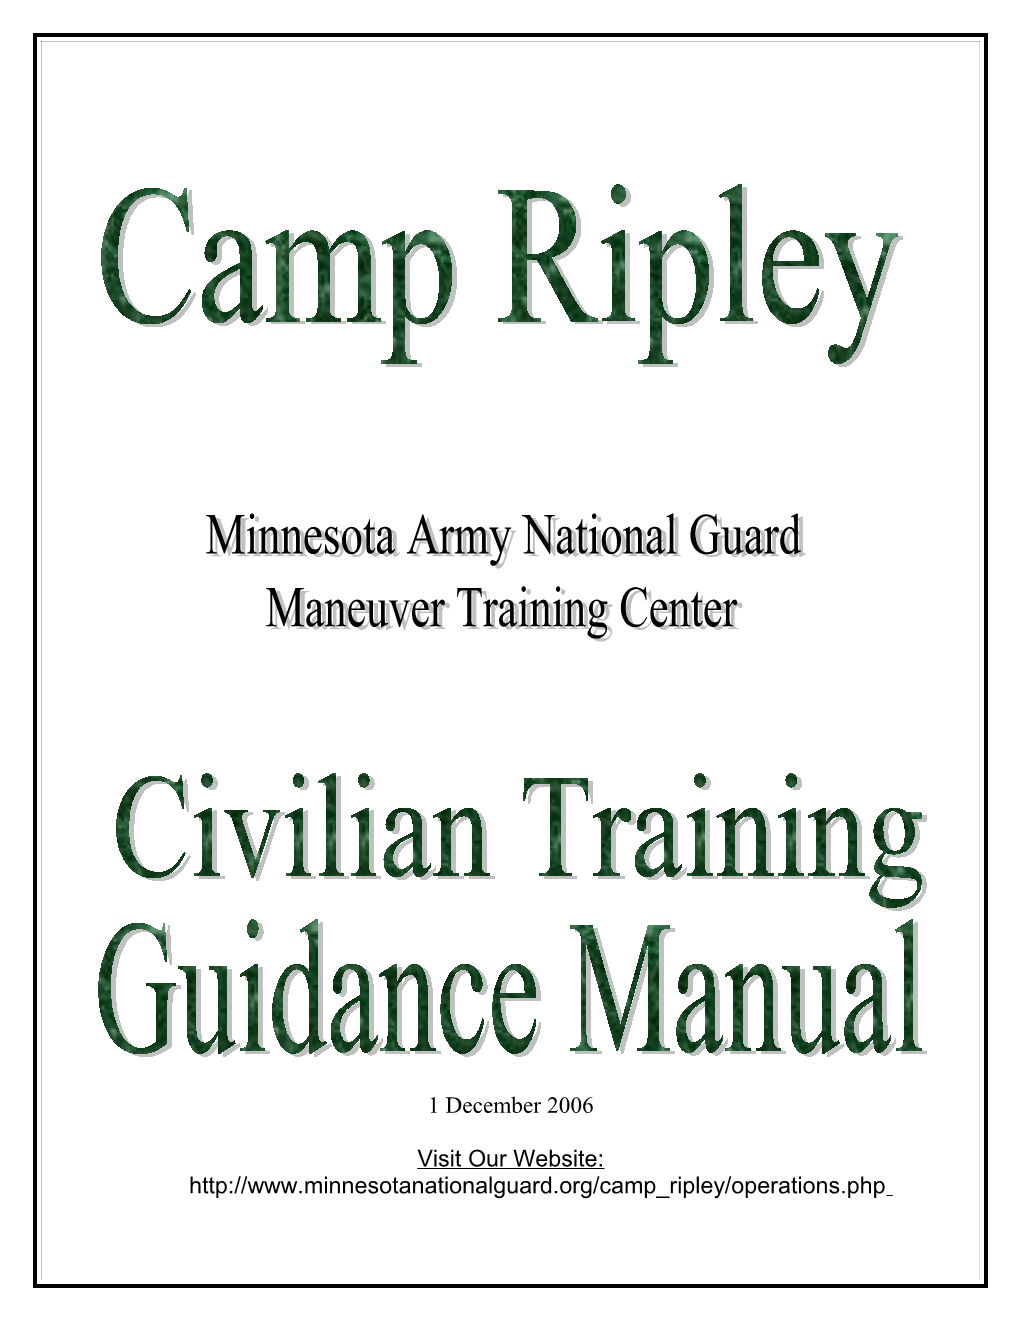 This Manual Supersedes Previous Civilian Guidance Manual